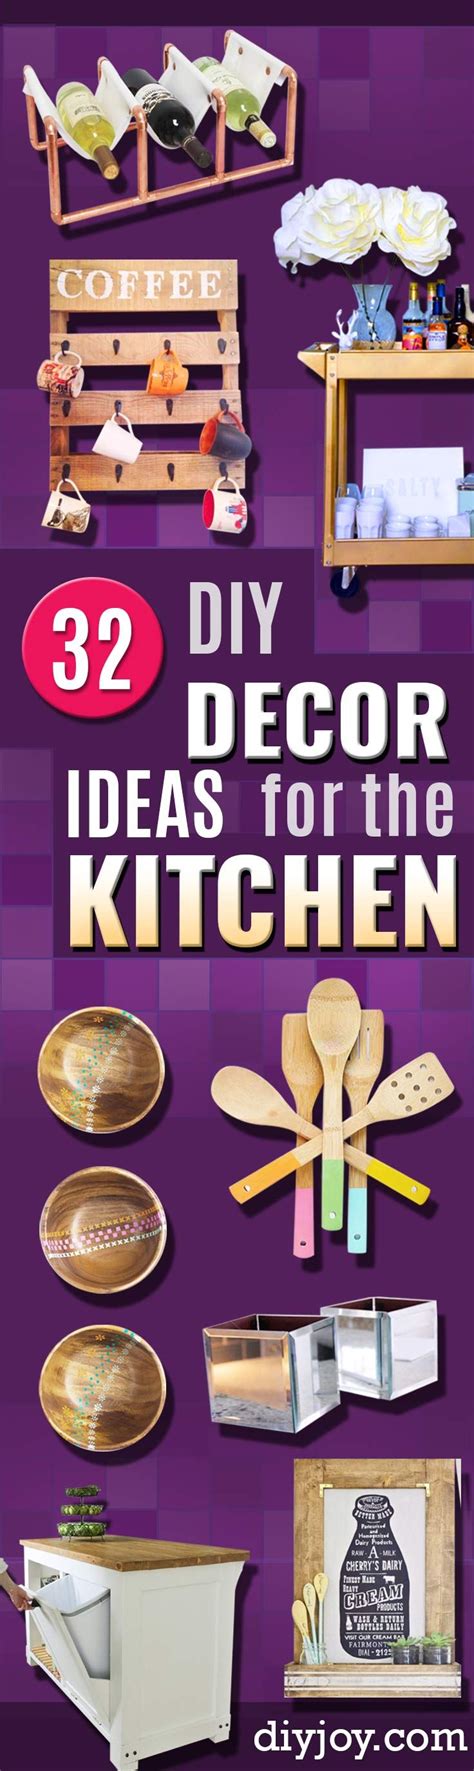 37 Creative DIY Kitchen Decor Ideas | Diy kitchen decor, Rustic diy projects, Diy kitchen